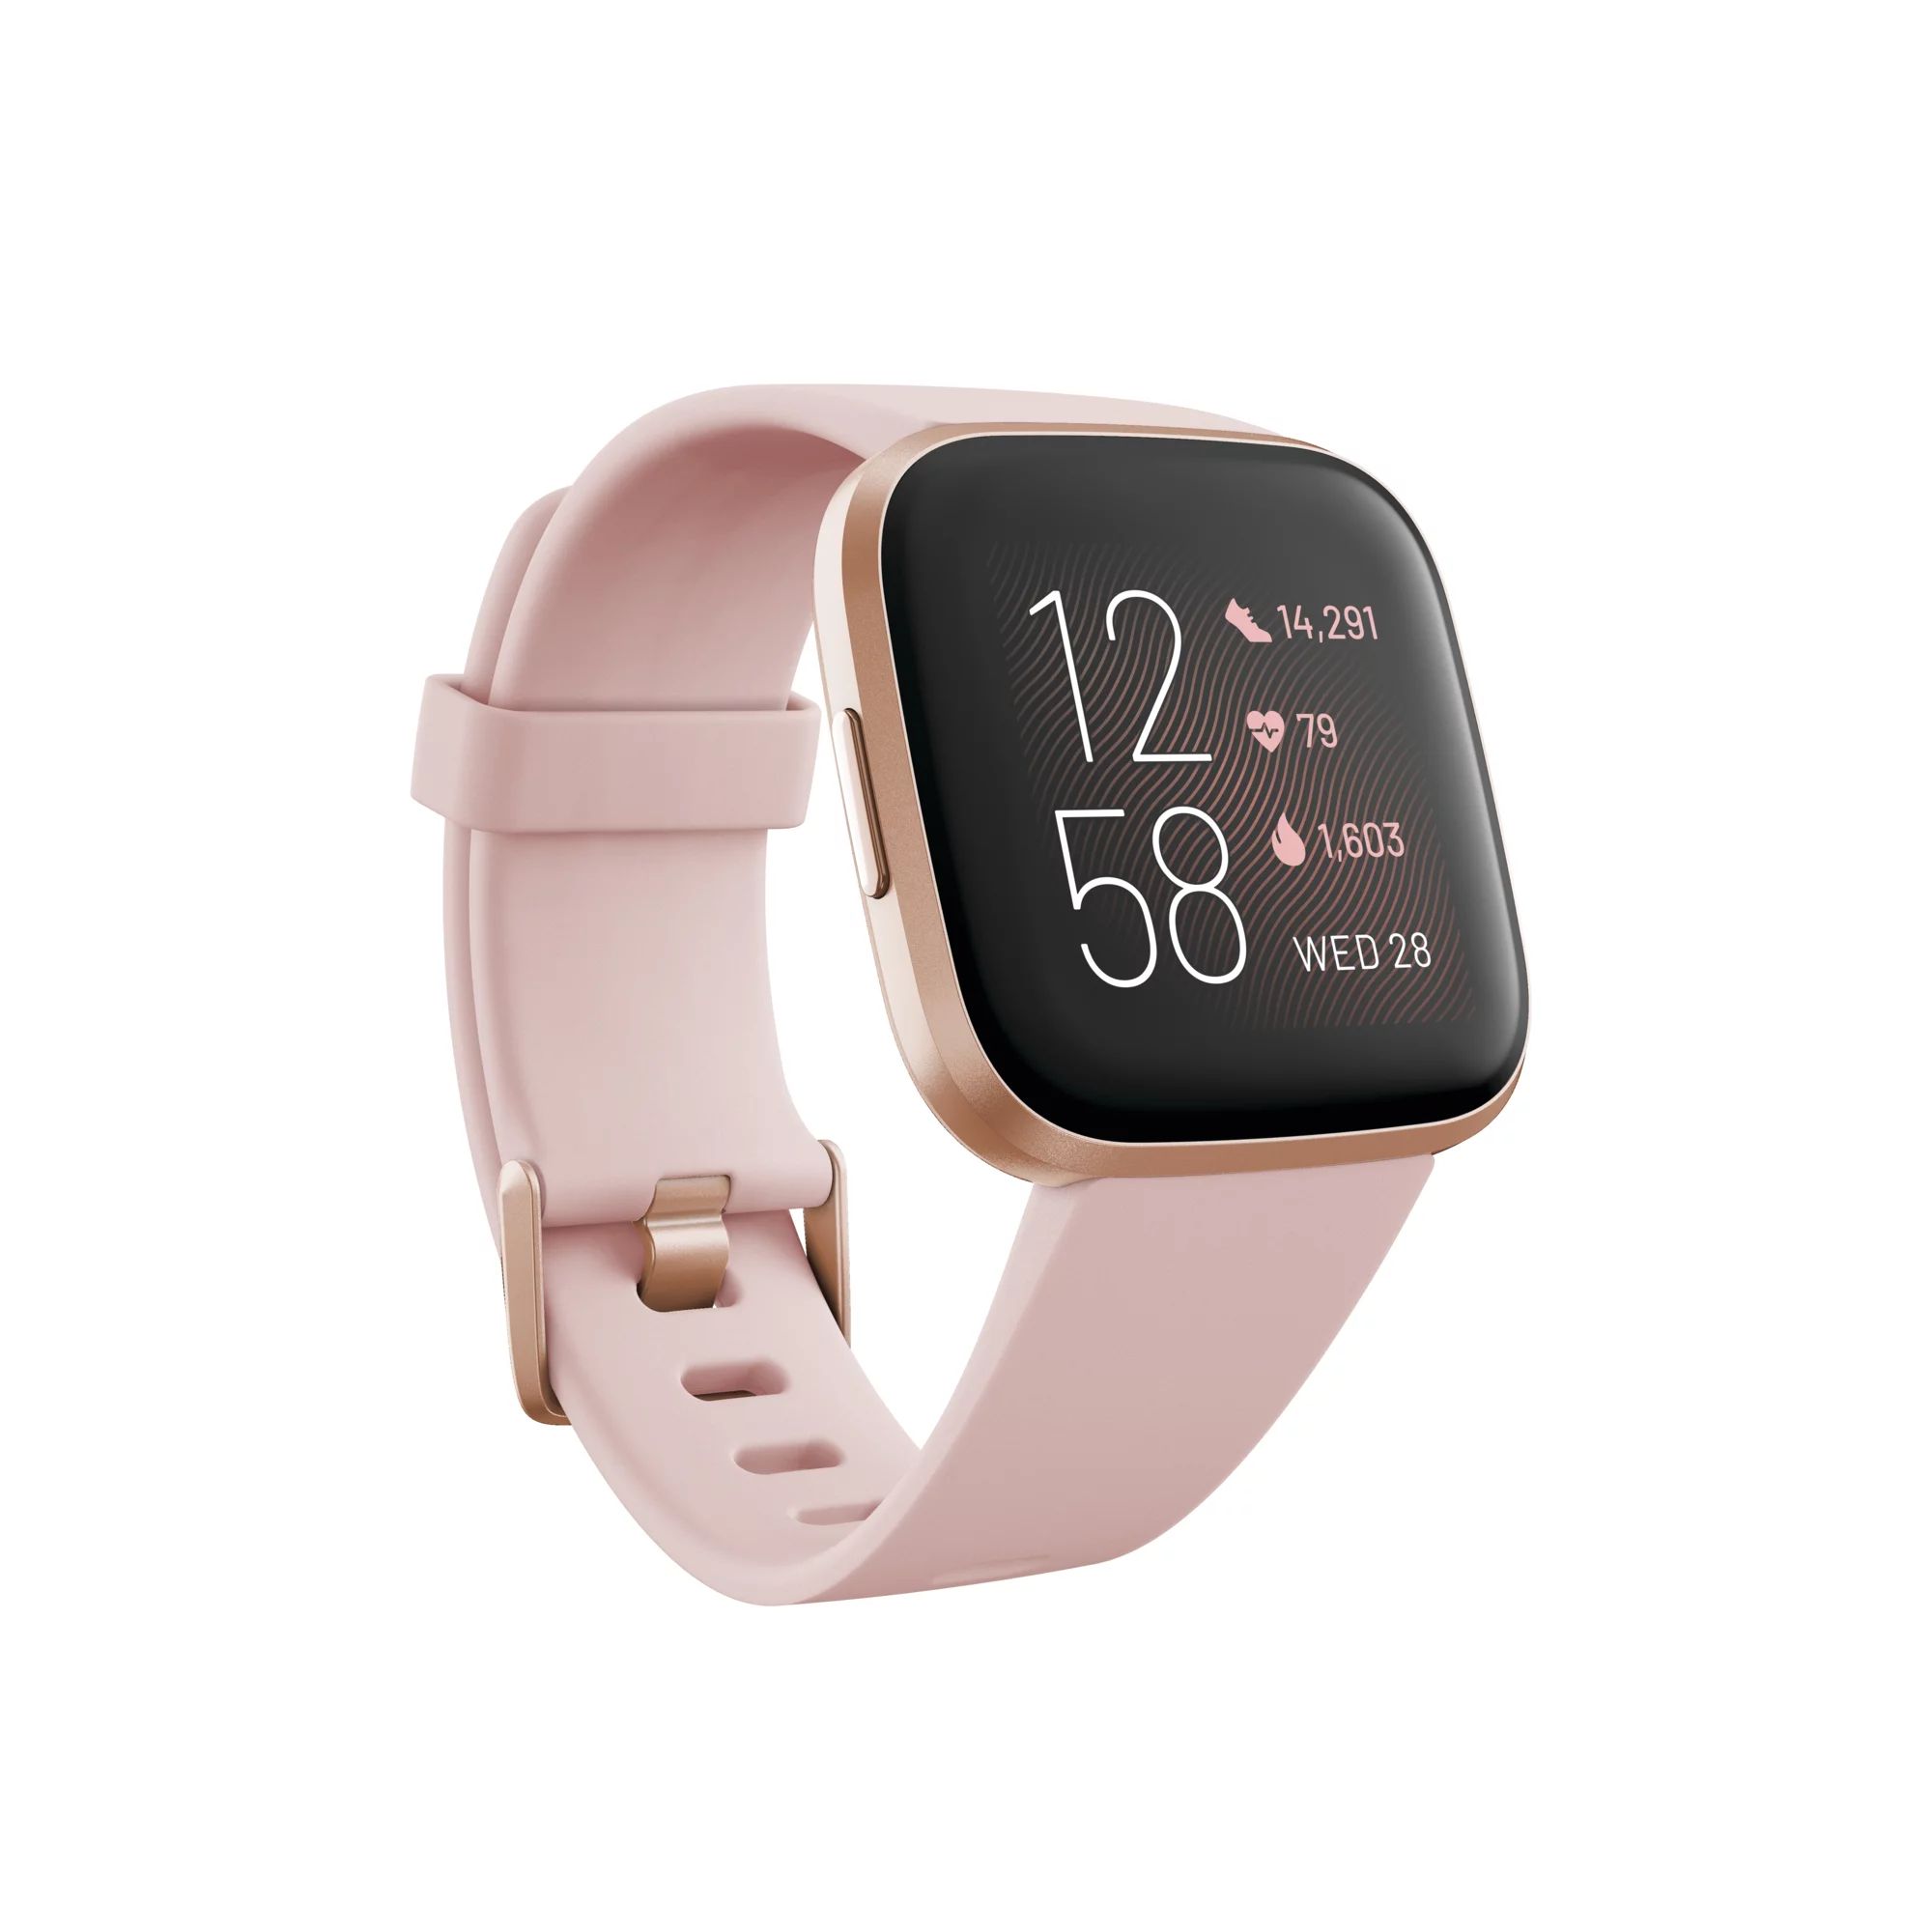 Fitbit Versa 2 Health & Fitness Smartwatch - Petal /Copper Rose Aluminum | Walmart (US)